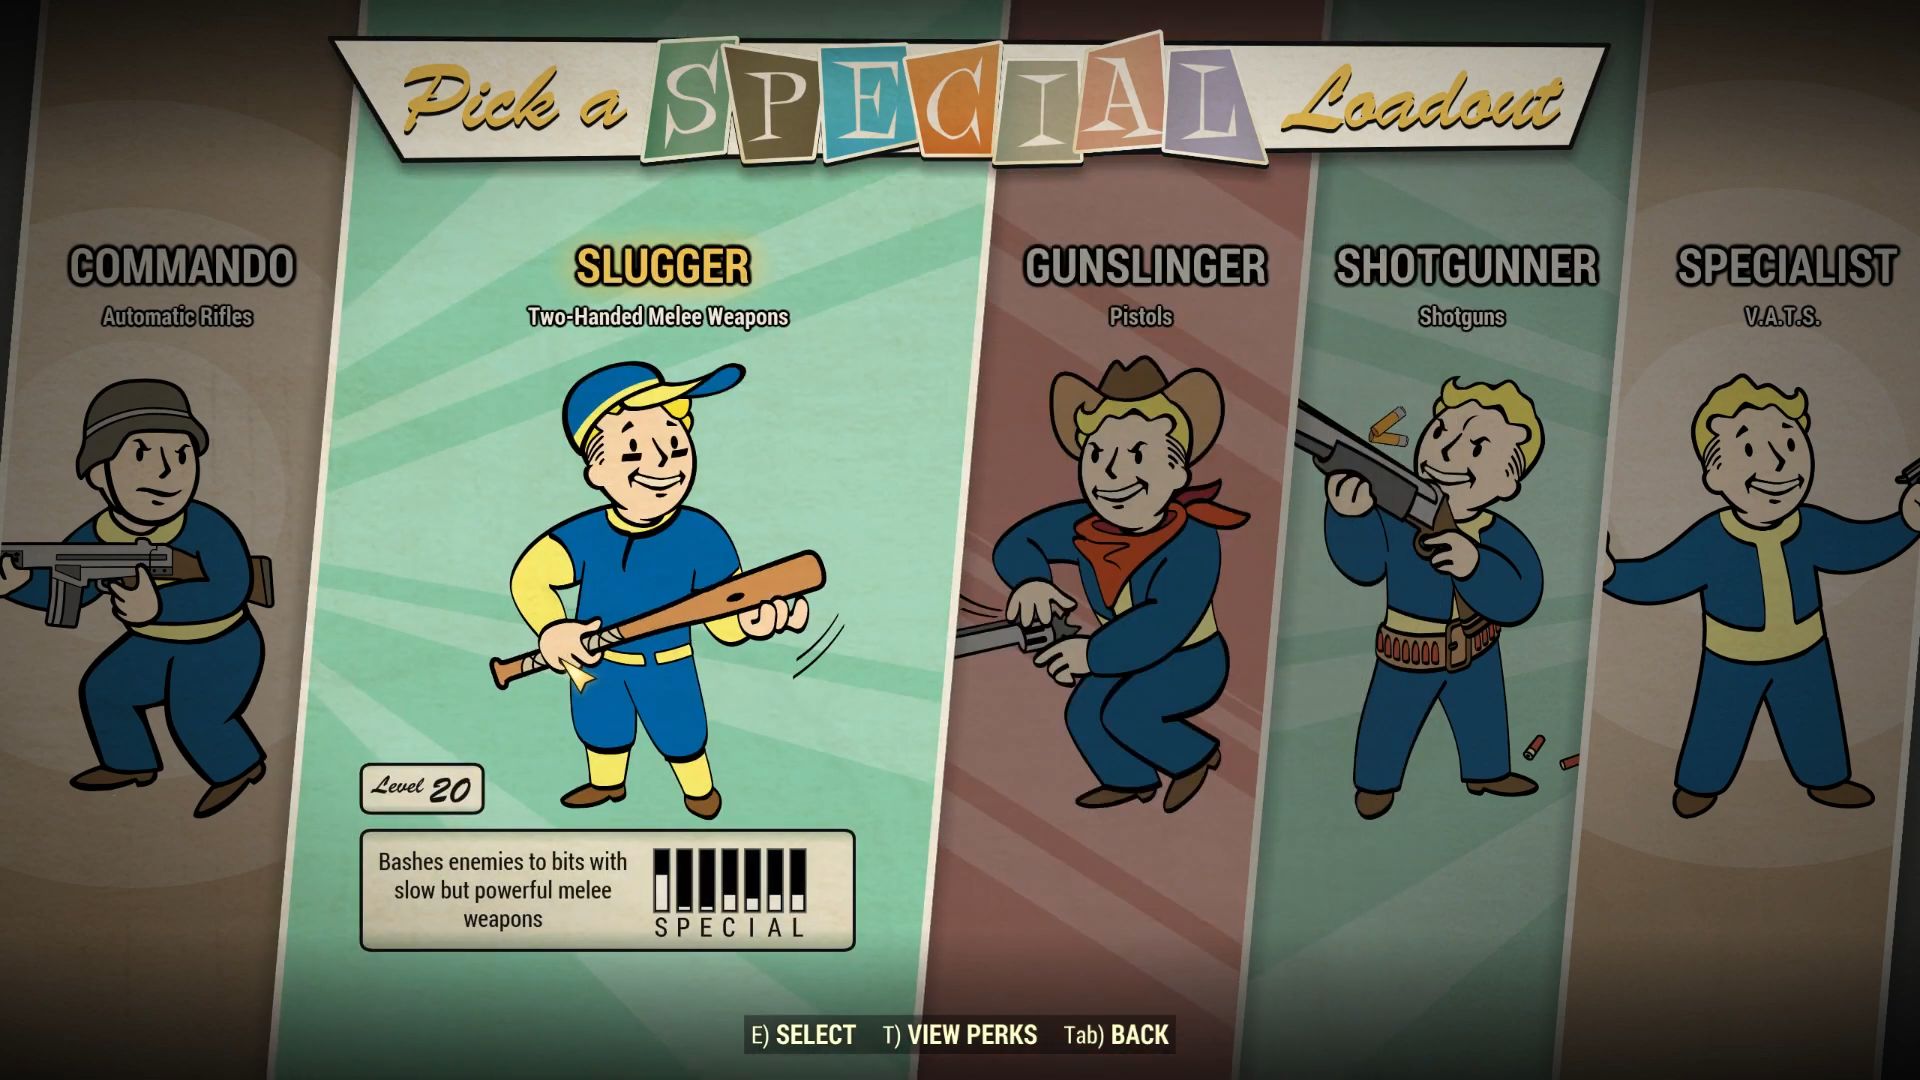 The Slugger loadout in Fallout 76